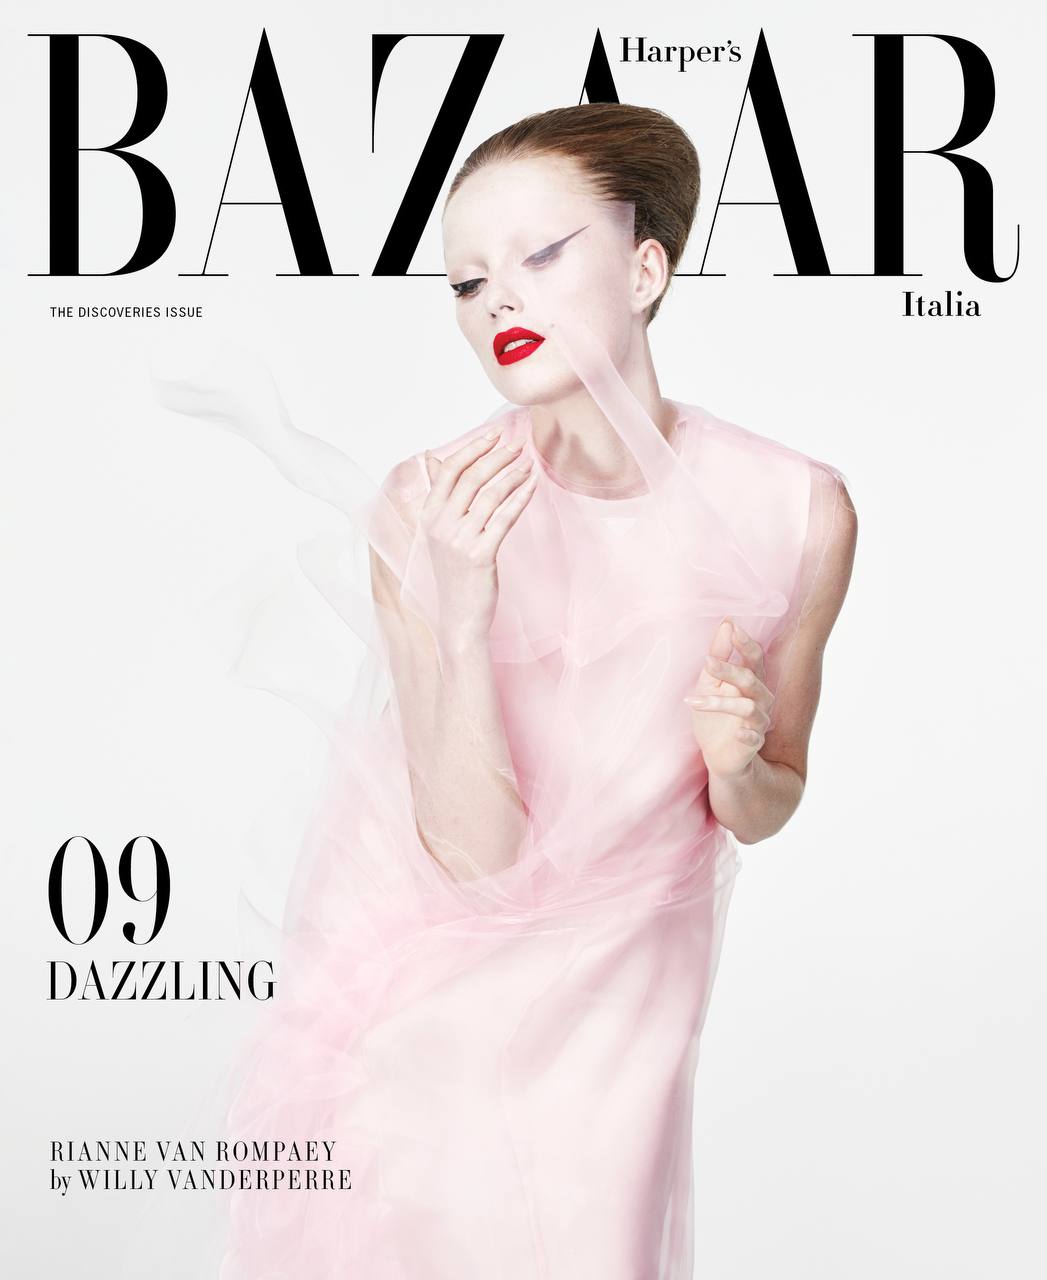 Фото дня: Рианн ван Ромпей для Harper's Bazaar Италия (фото 1)